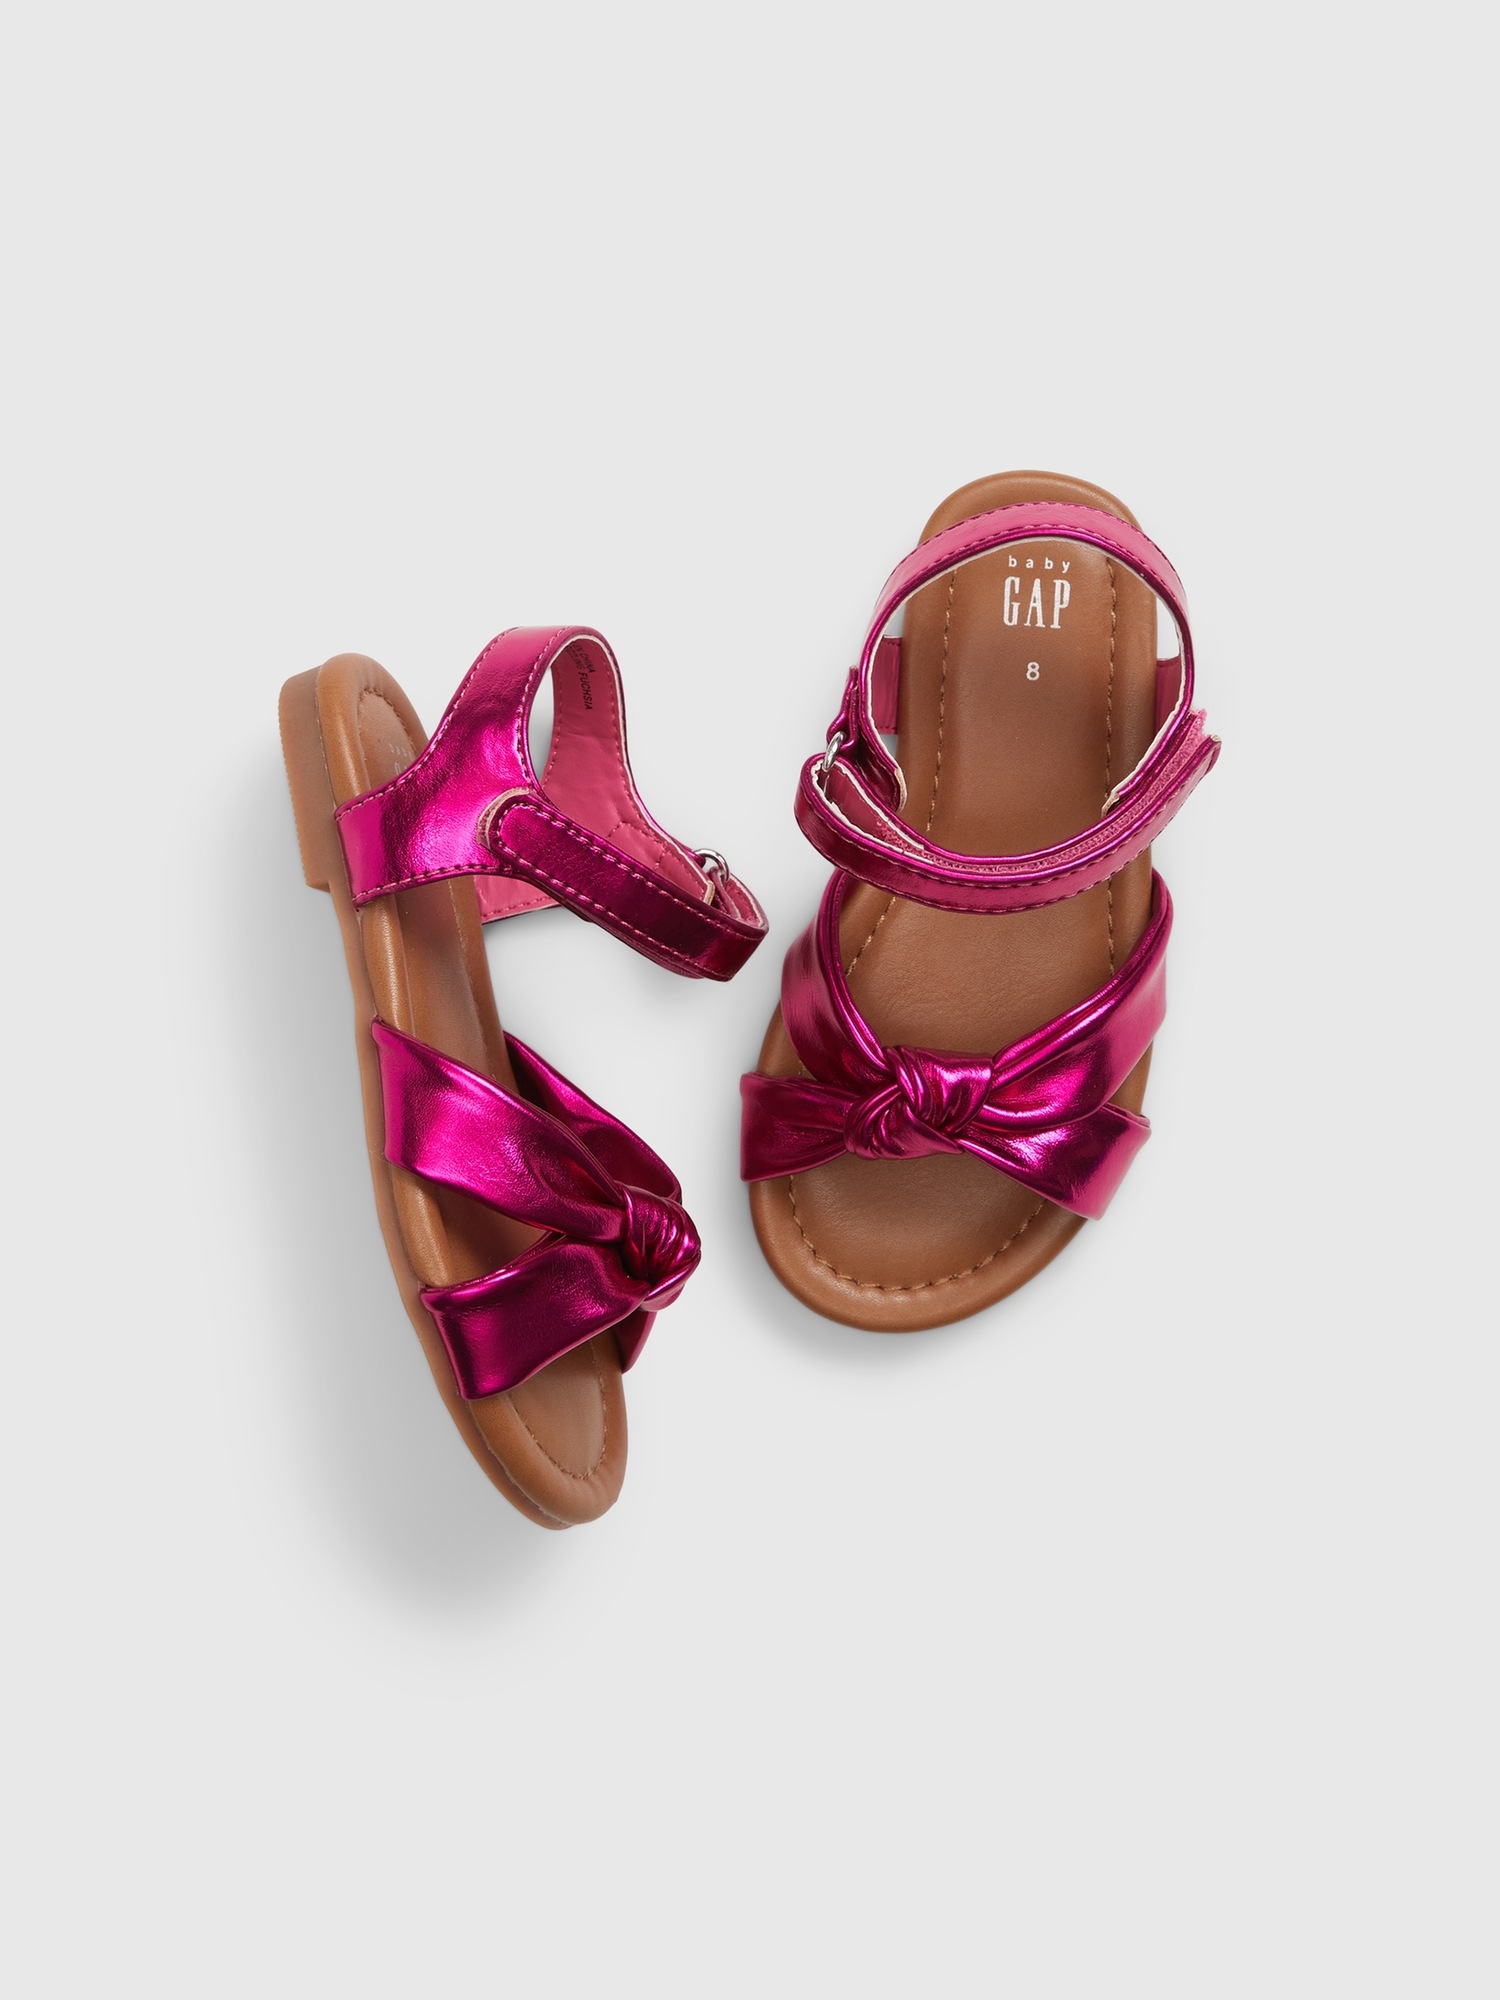 Gap Toddler Strappy Sandals pink. 1